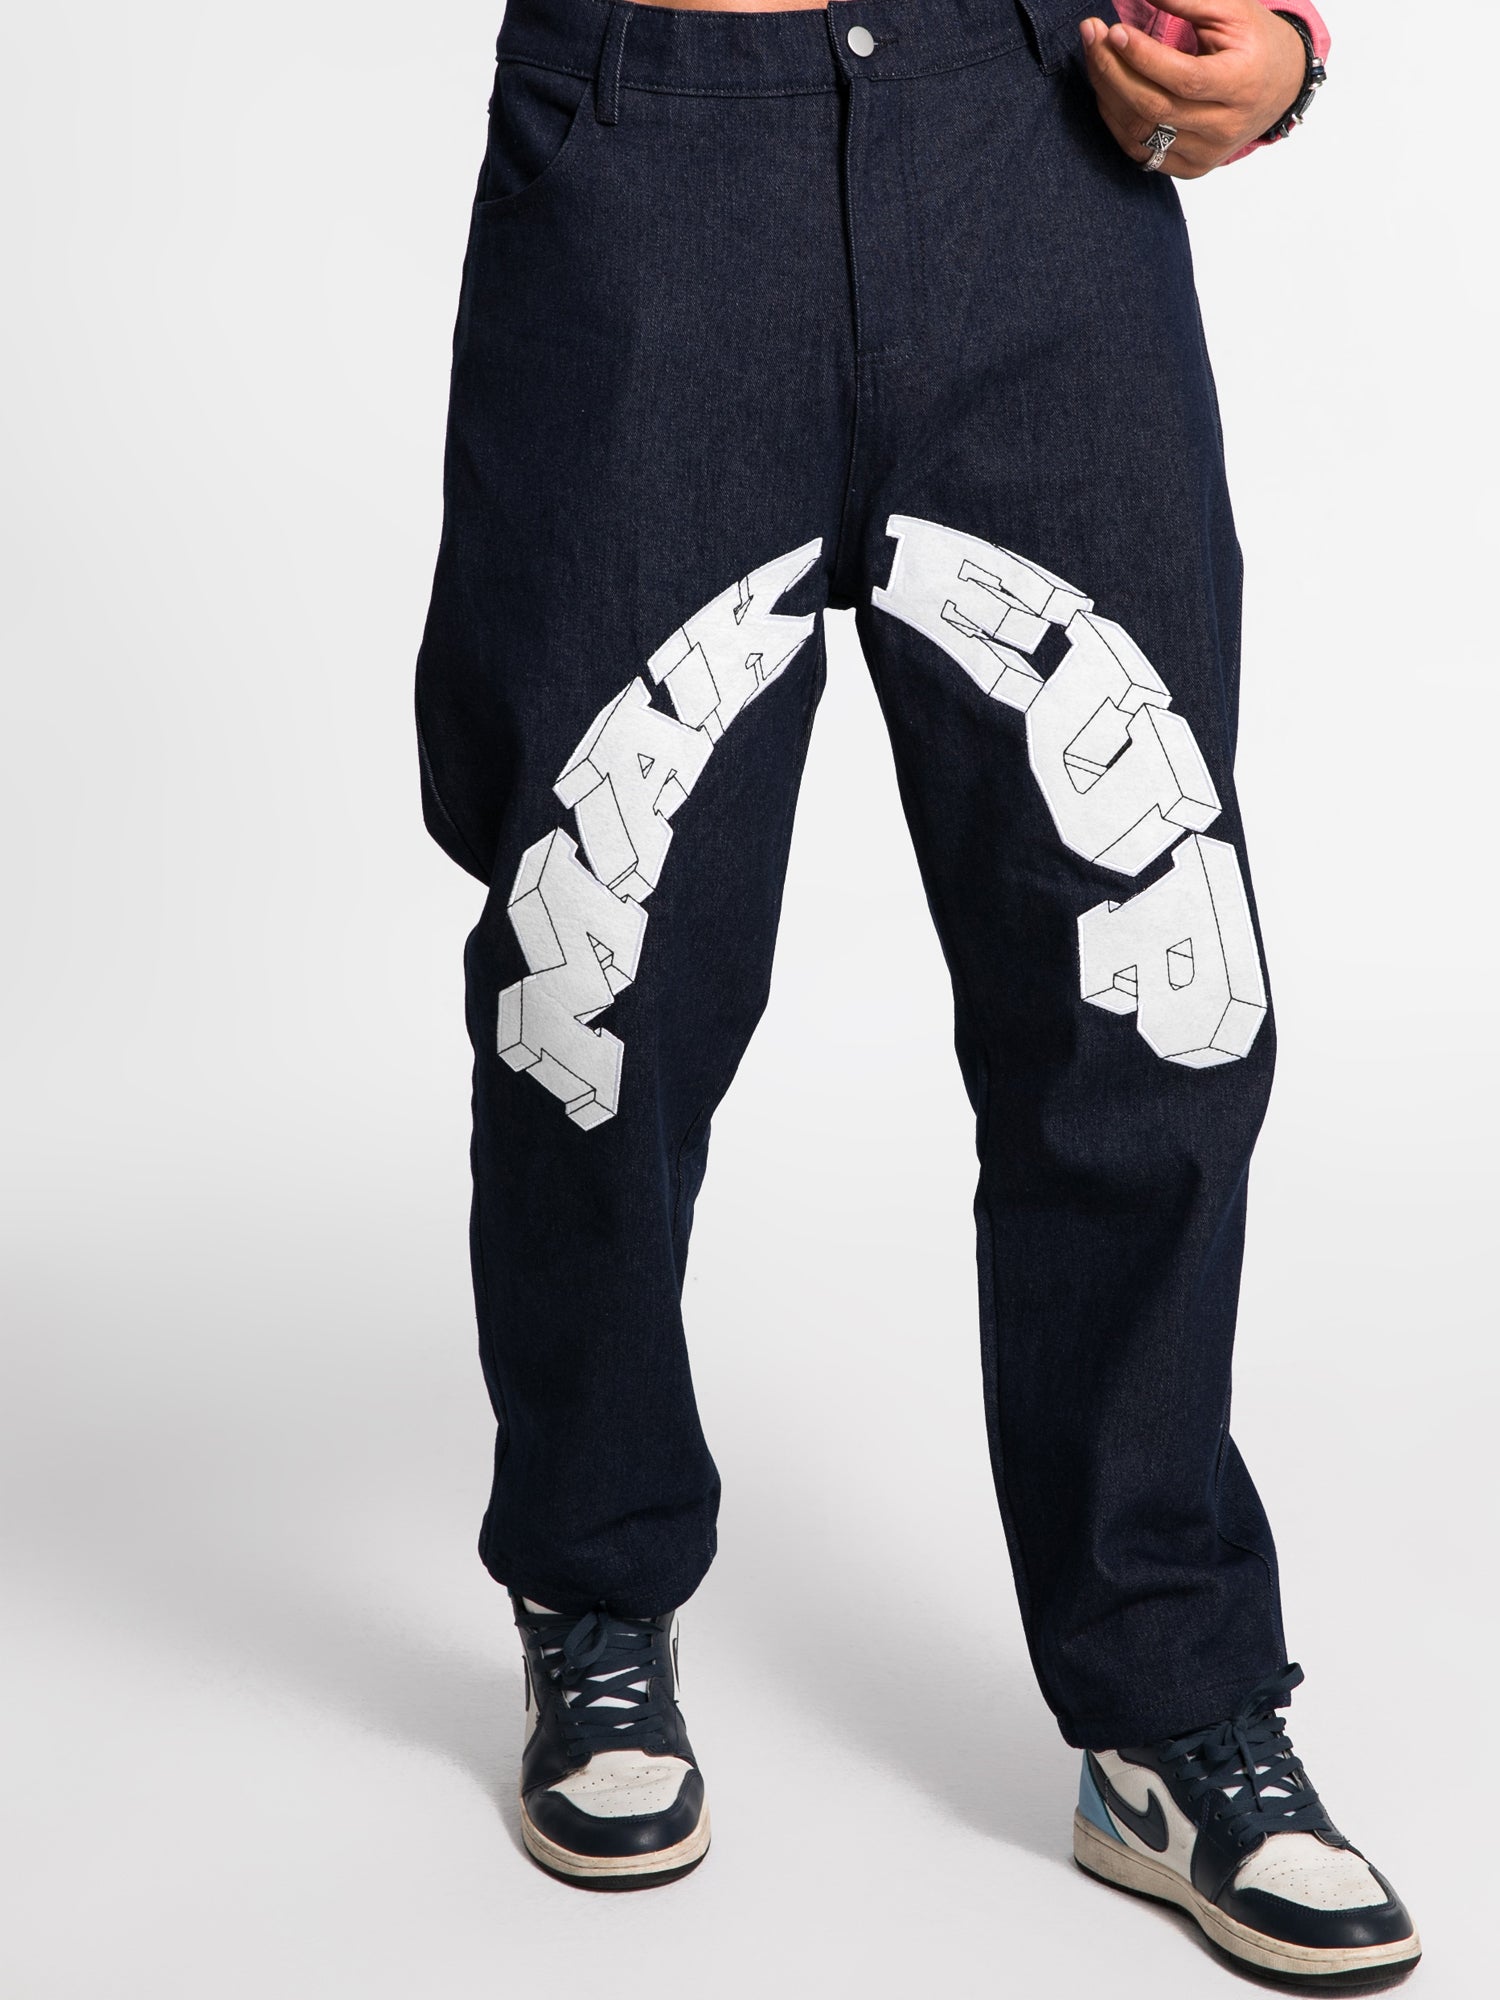 JUSTNOTAG Street Letter Cotton Zipper Jeans